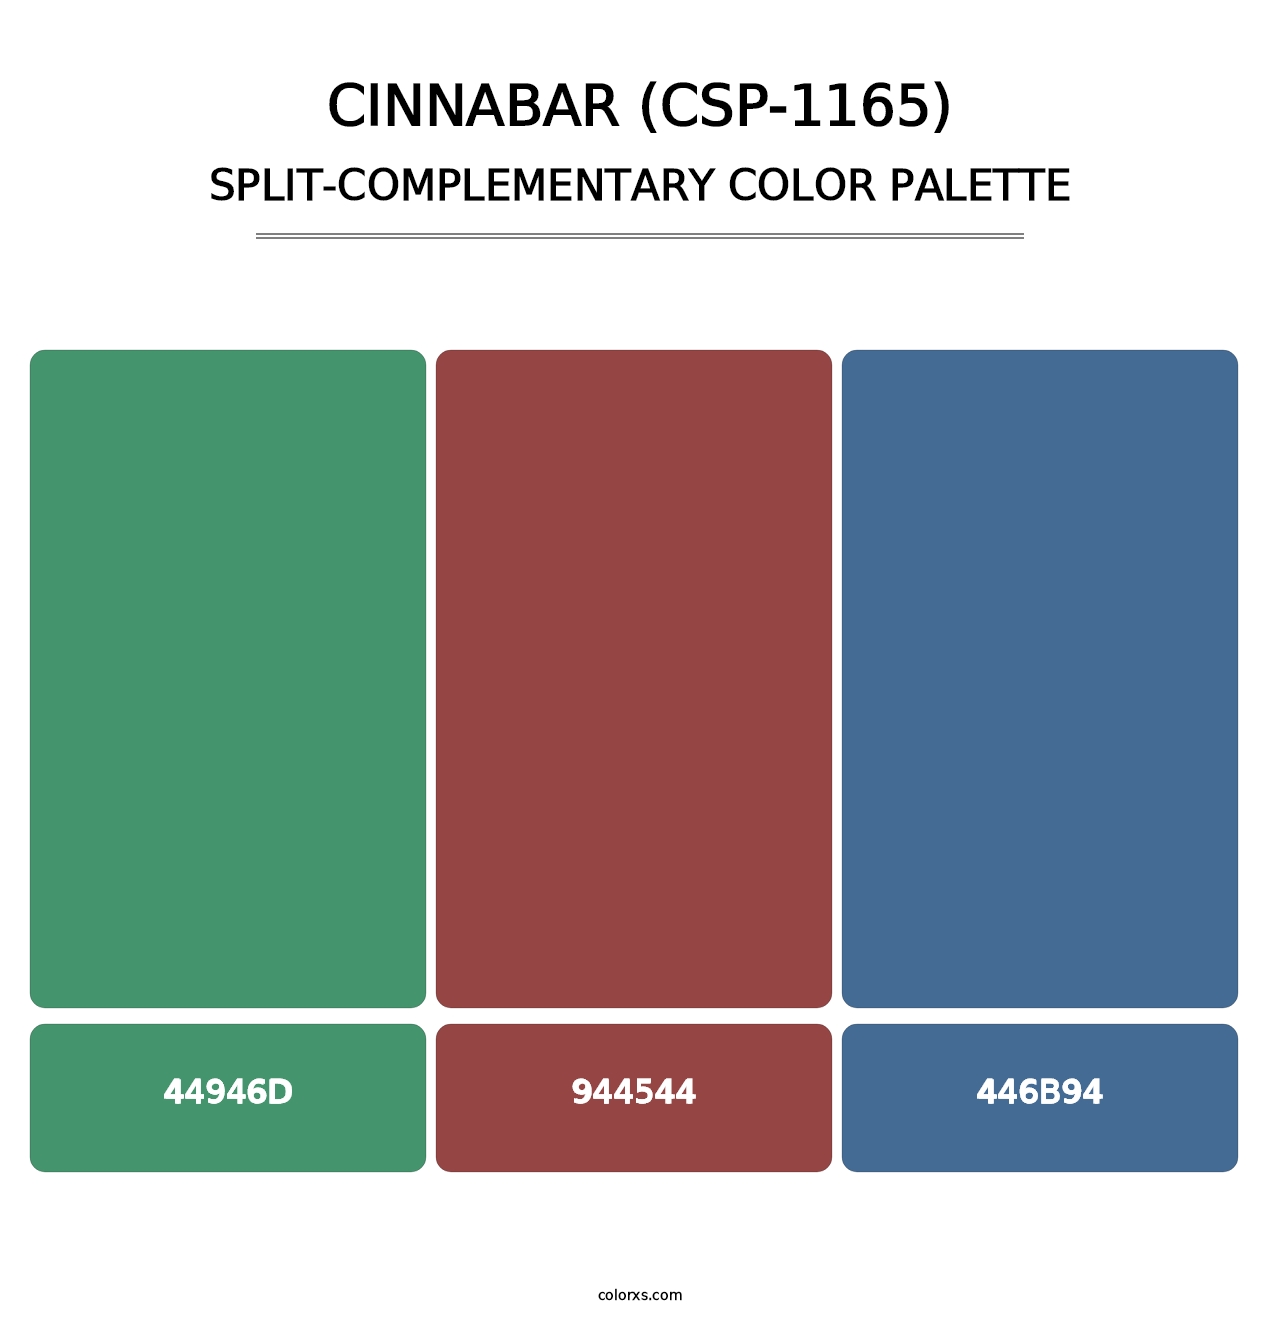 Cinnabar (CSP-1165) - Split-Complementary Color Palette